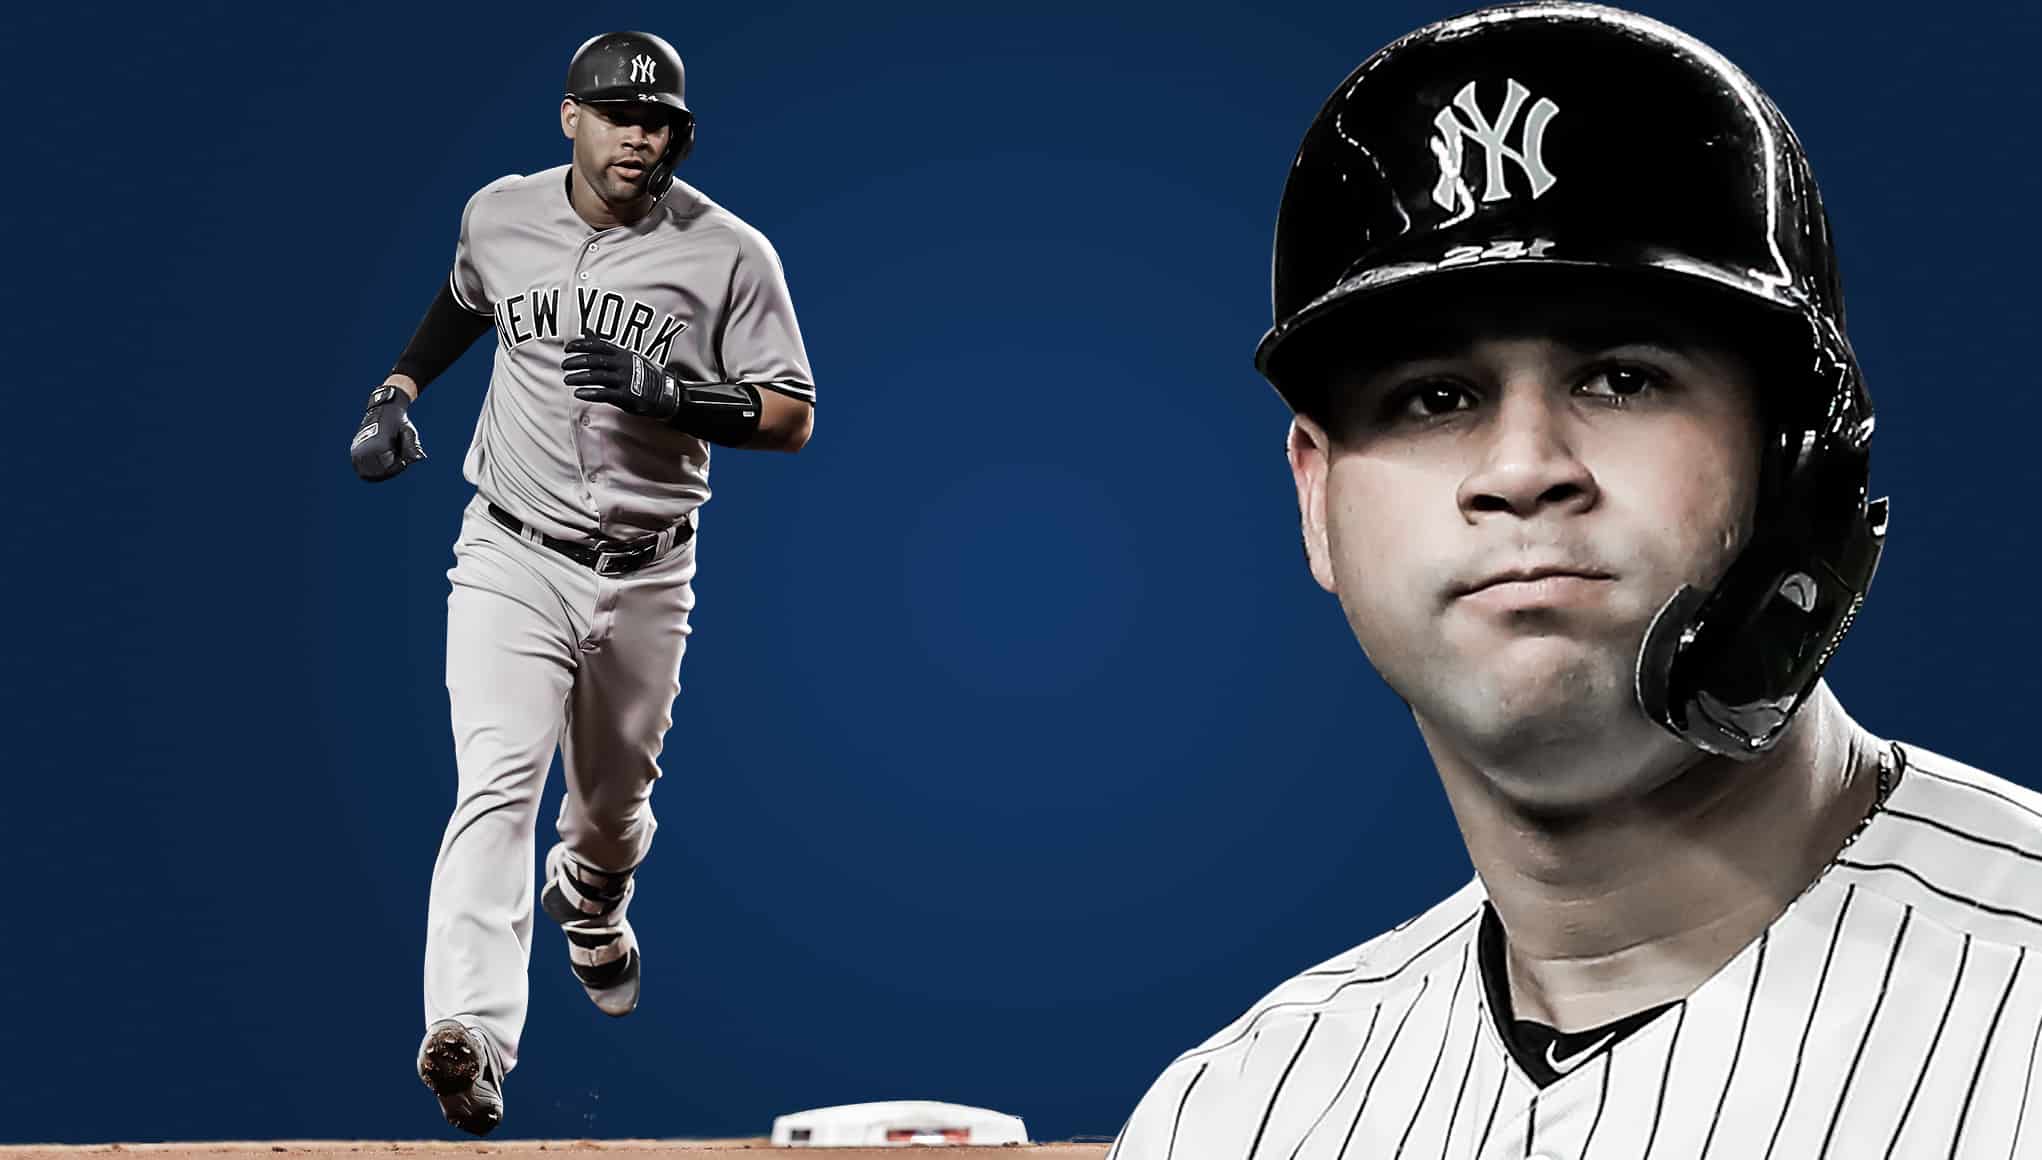 Gary Sanchez New York Yankees